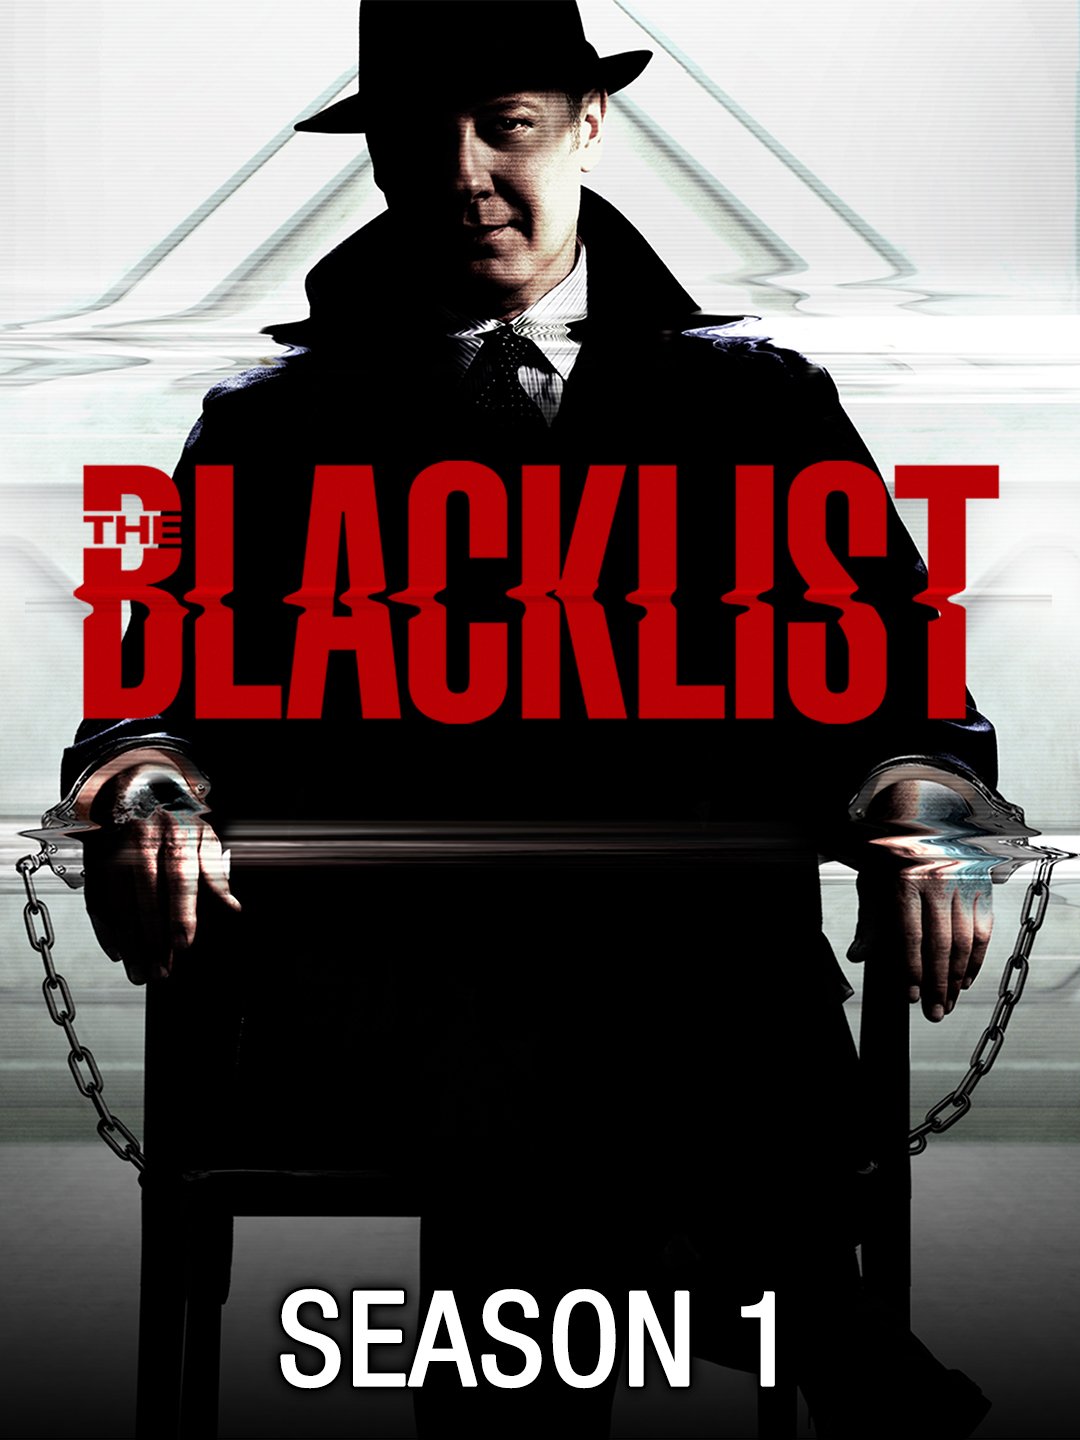 Blacklist series